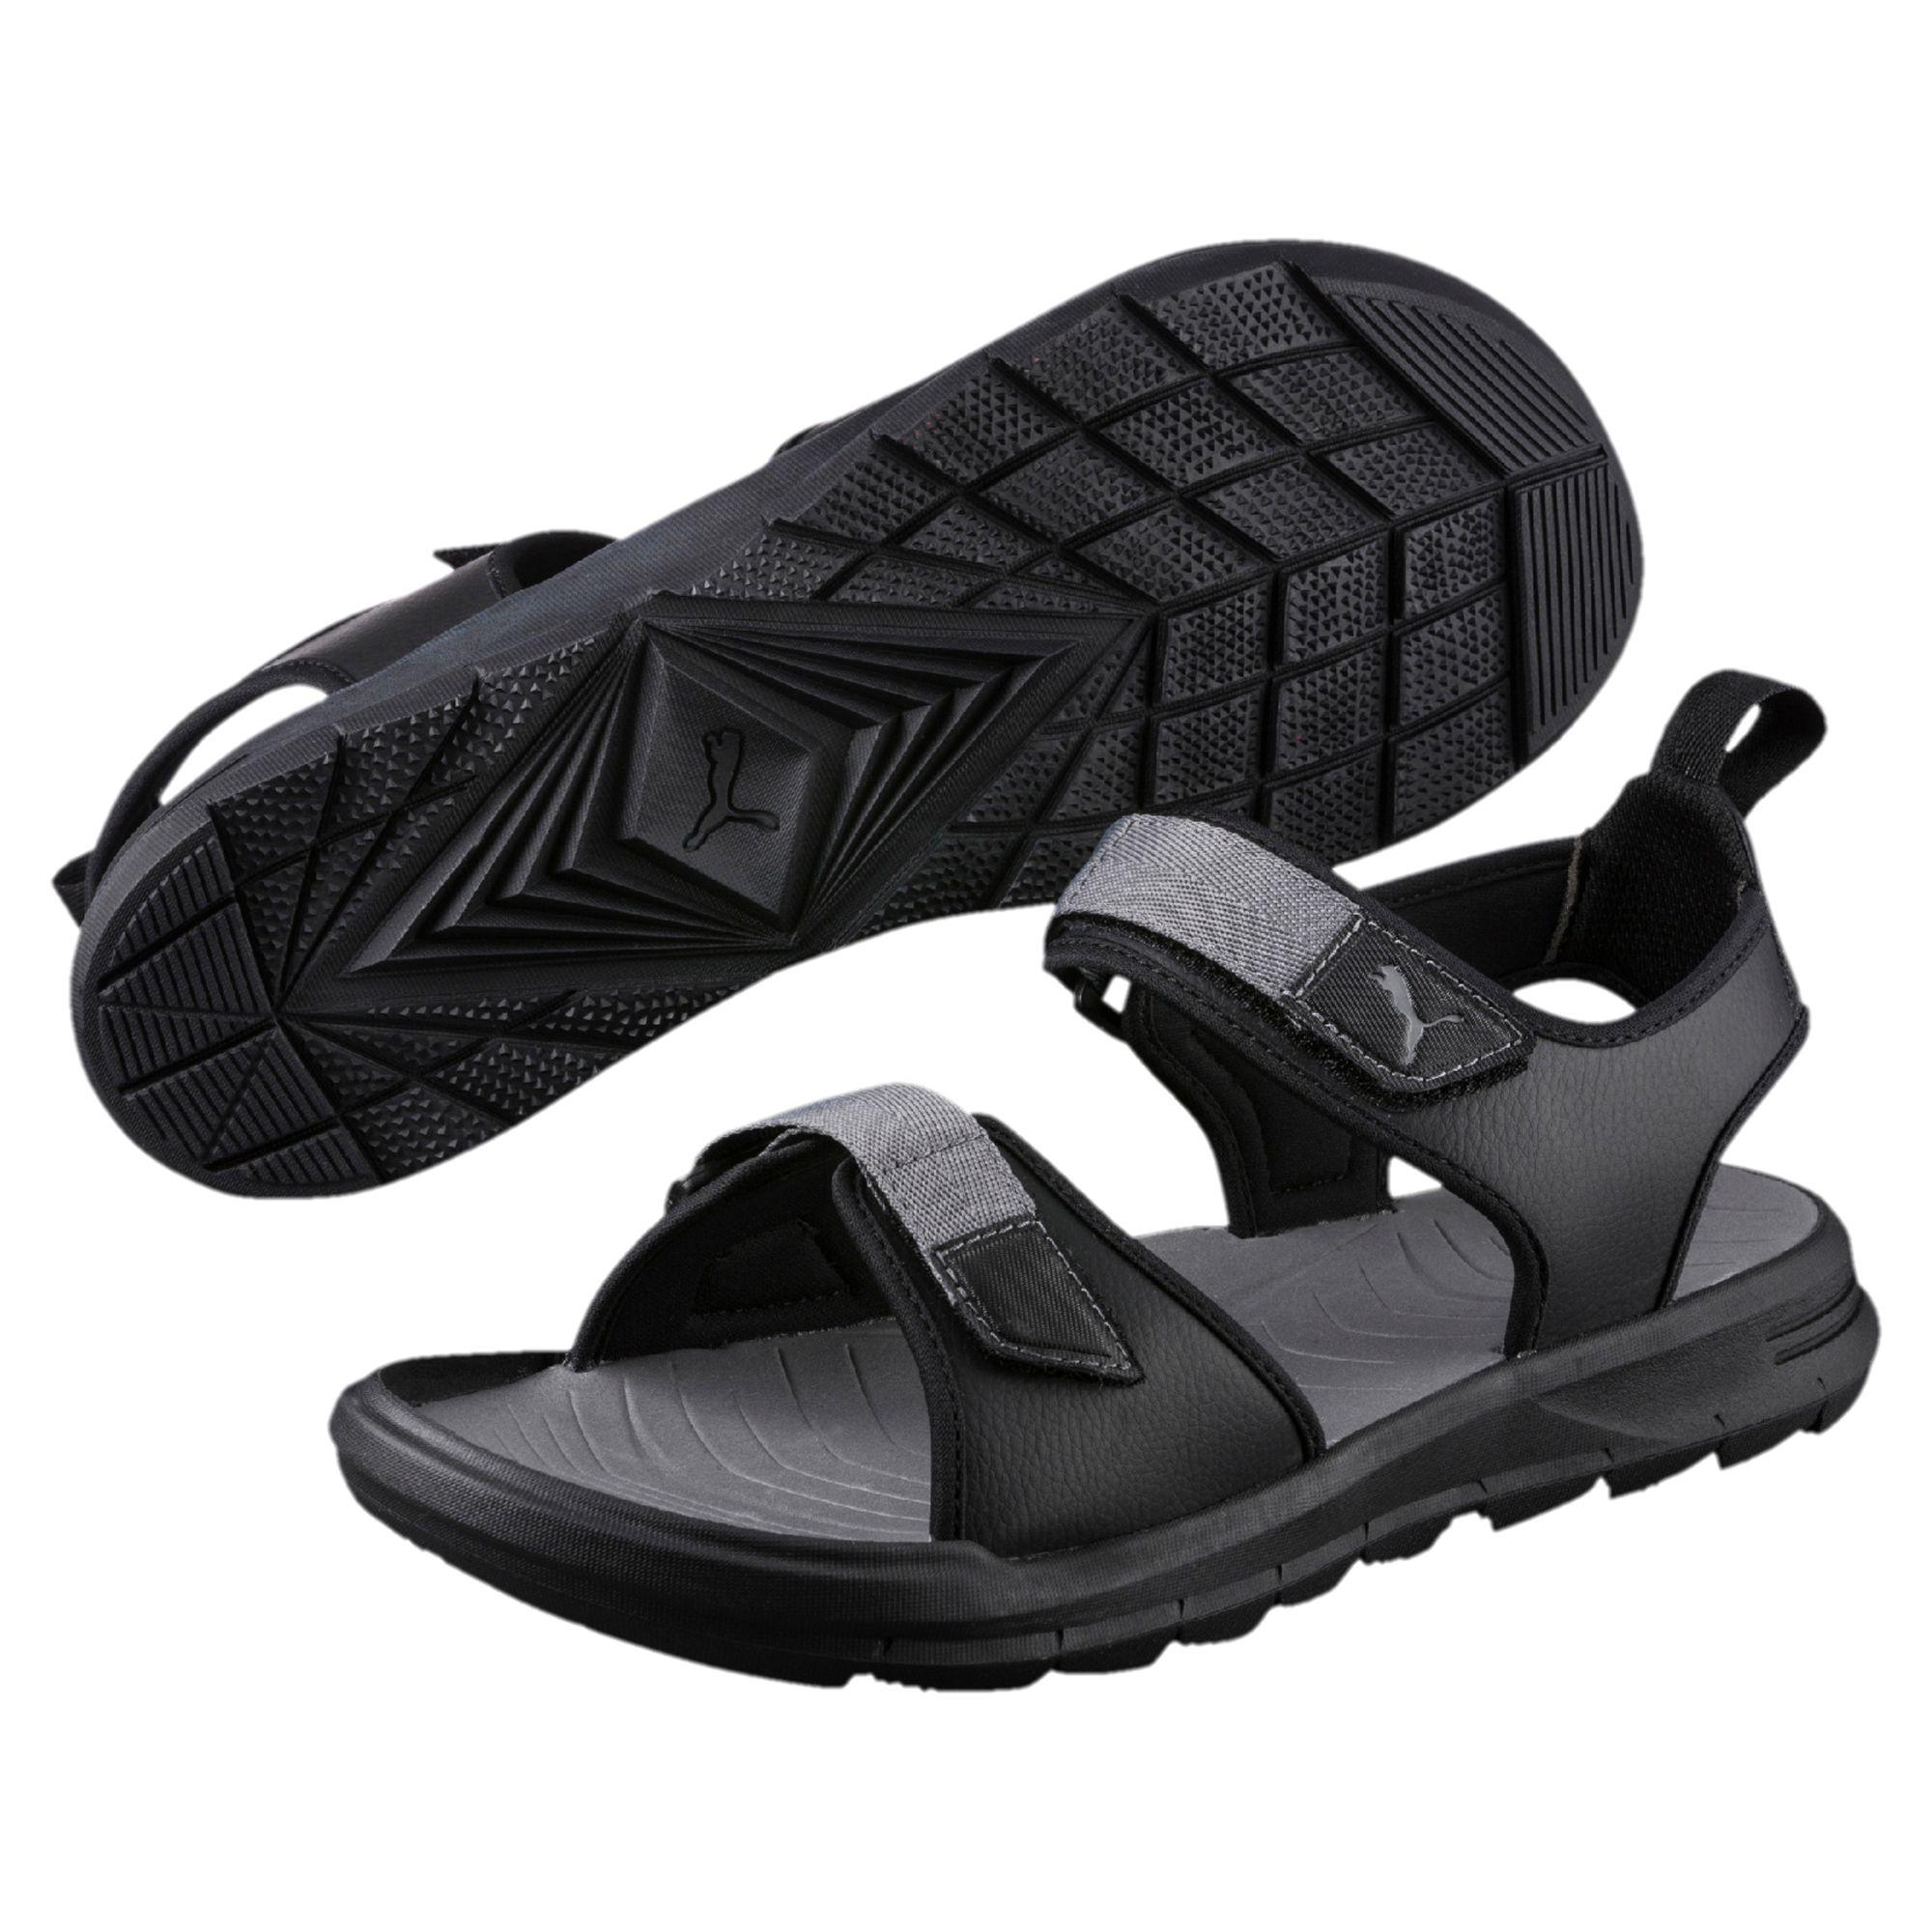 Lyst - PUMA Wild Men's Sandals in Black for Men